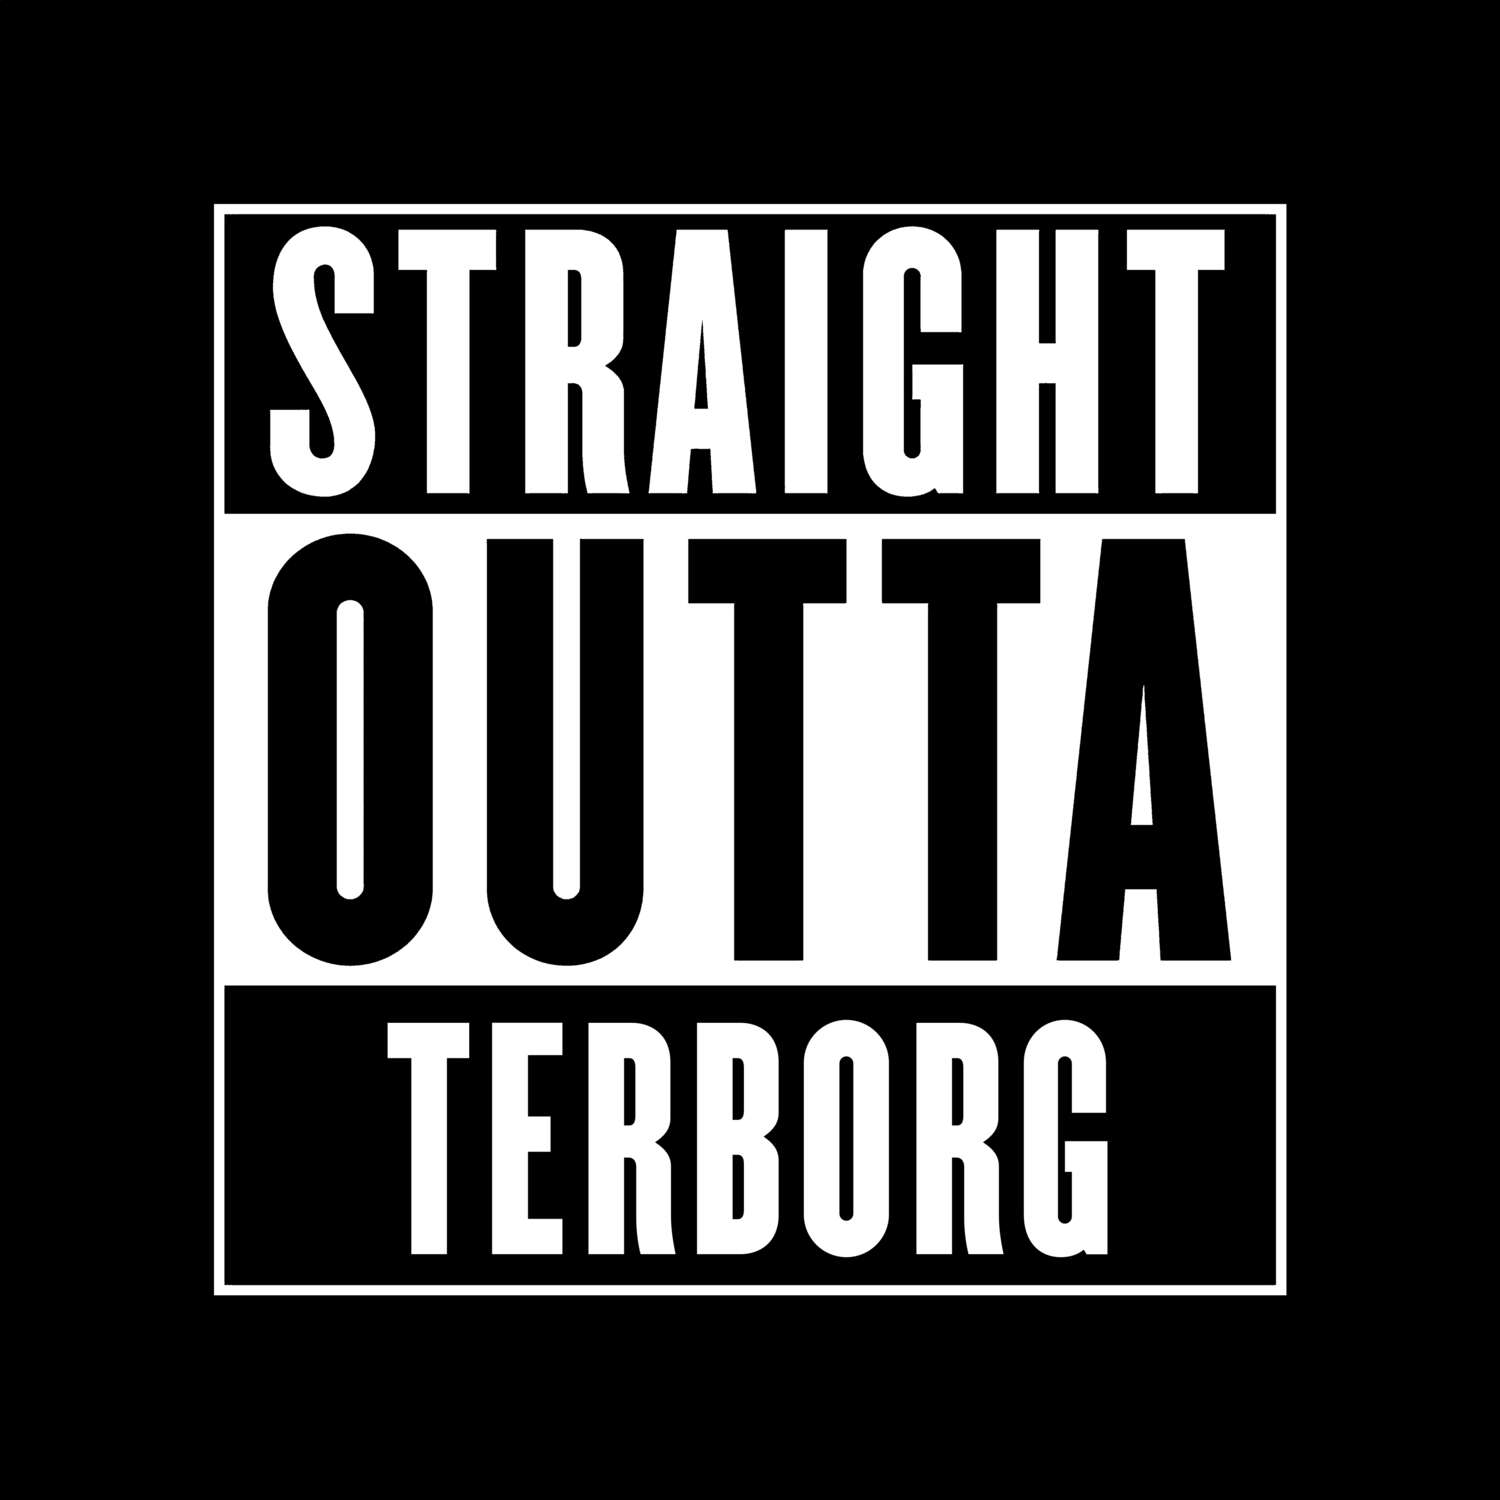 Terborg T-Shirt »Straight Outta«